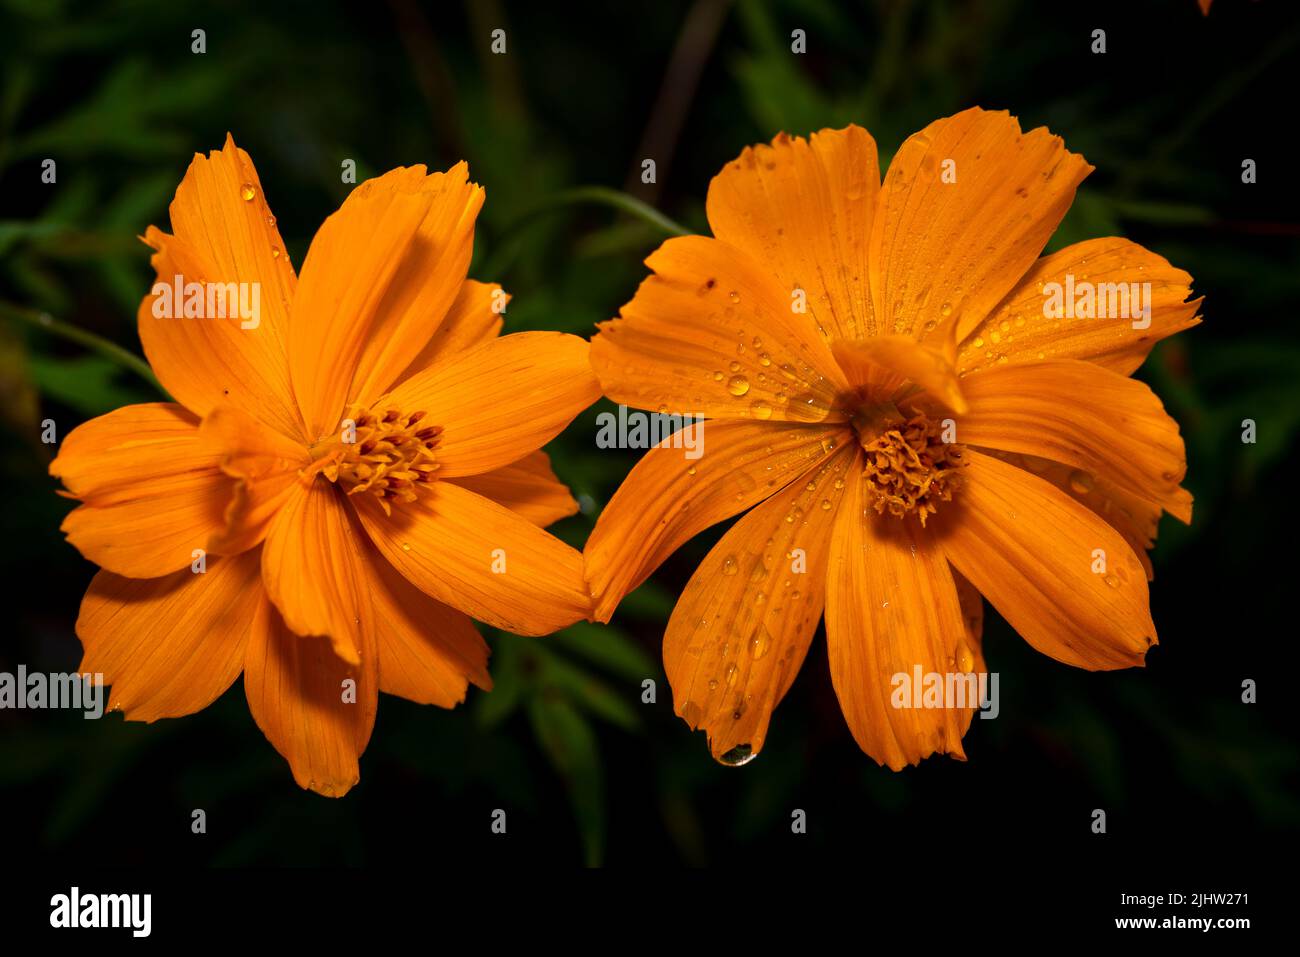 Double petal yellow marigold flower photo Stock Photo